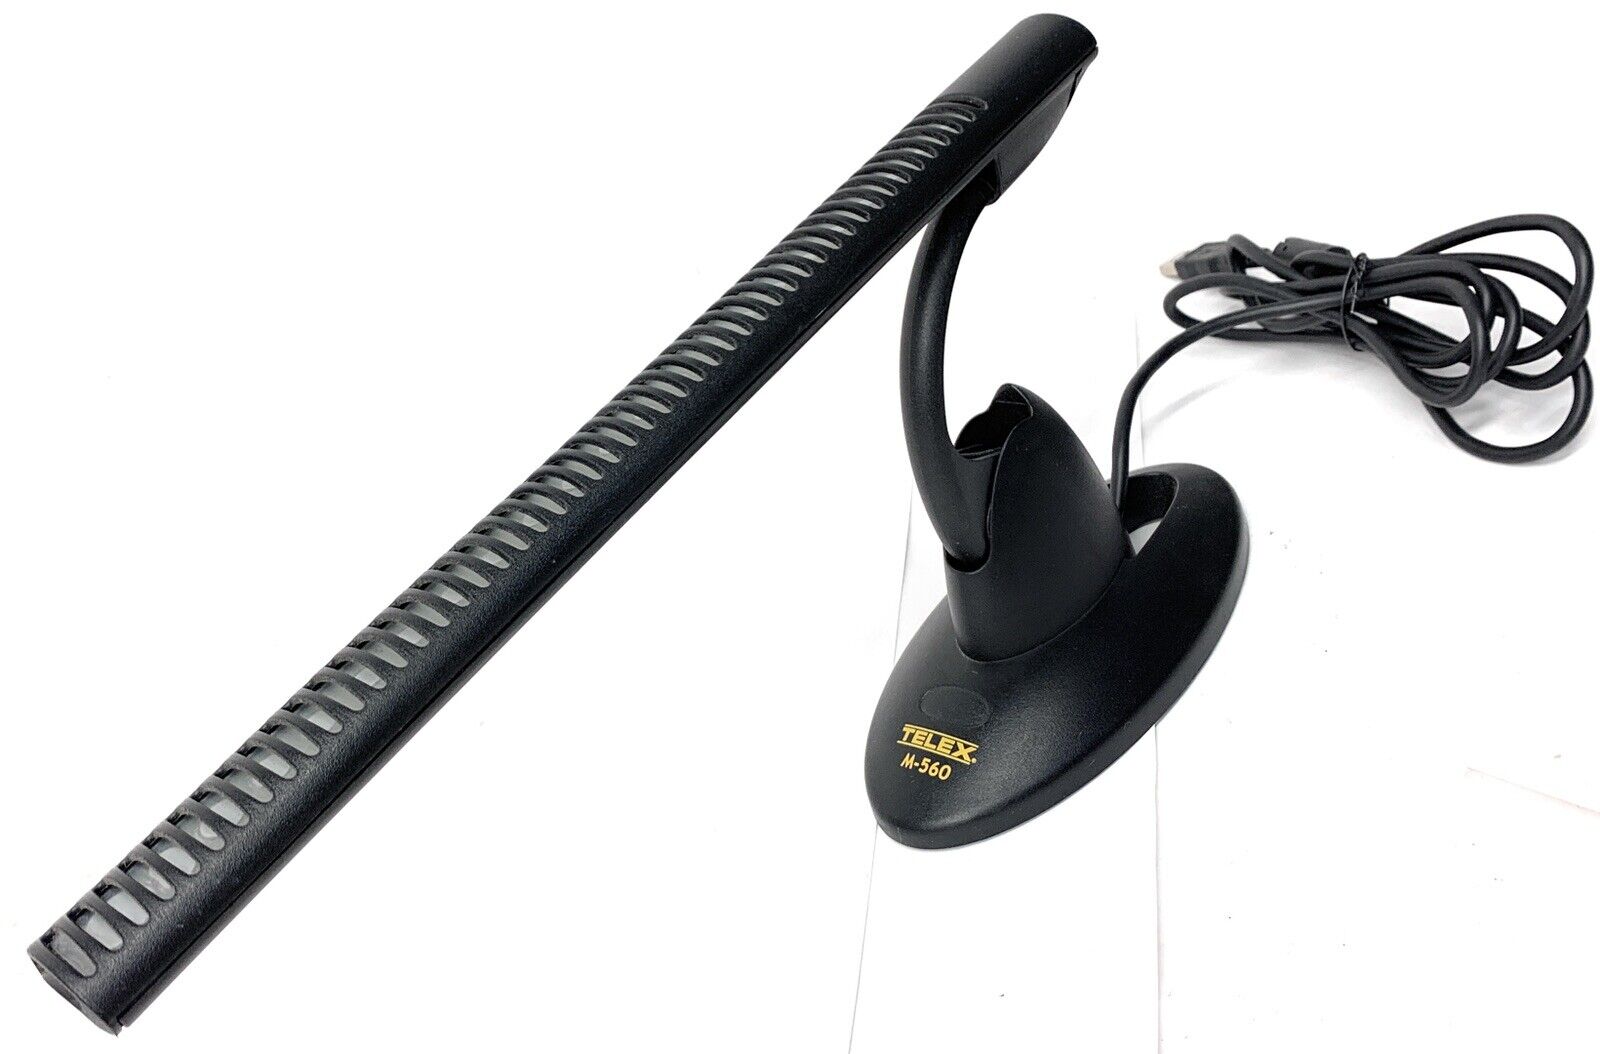 Telex M-560 Super-directional USB Digital Microphone